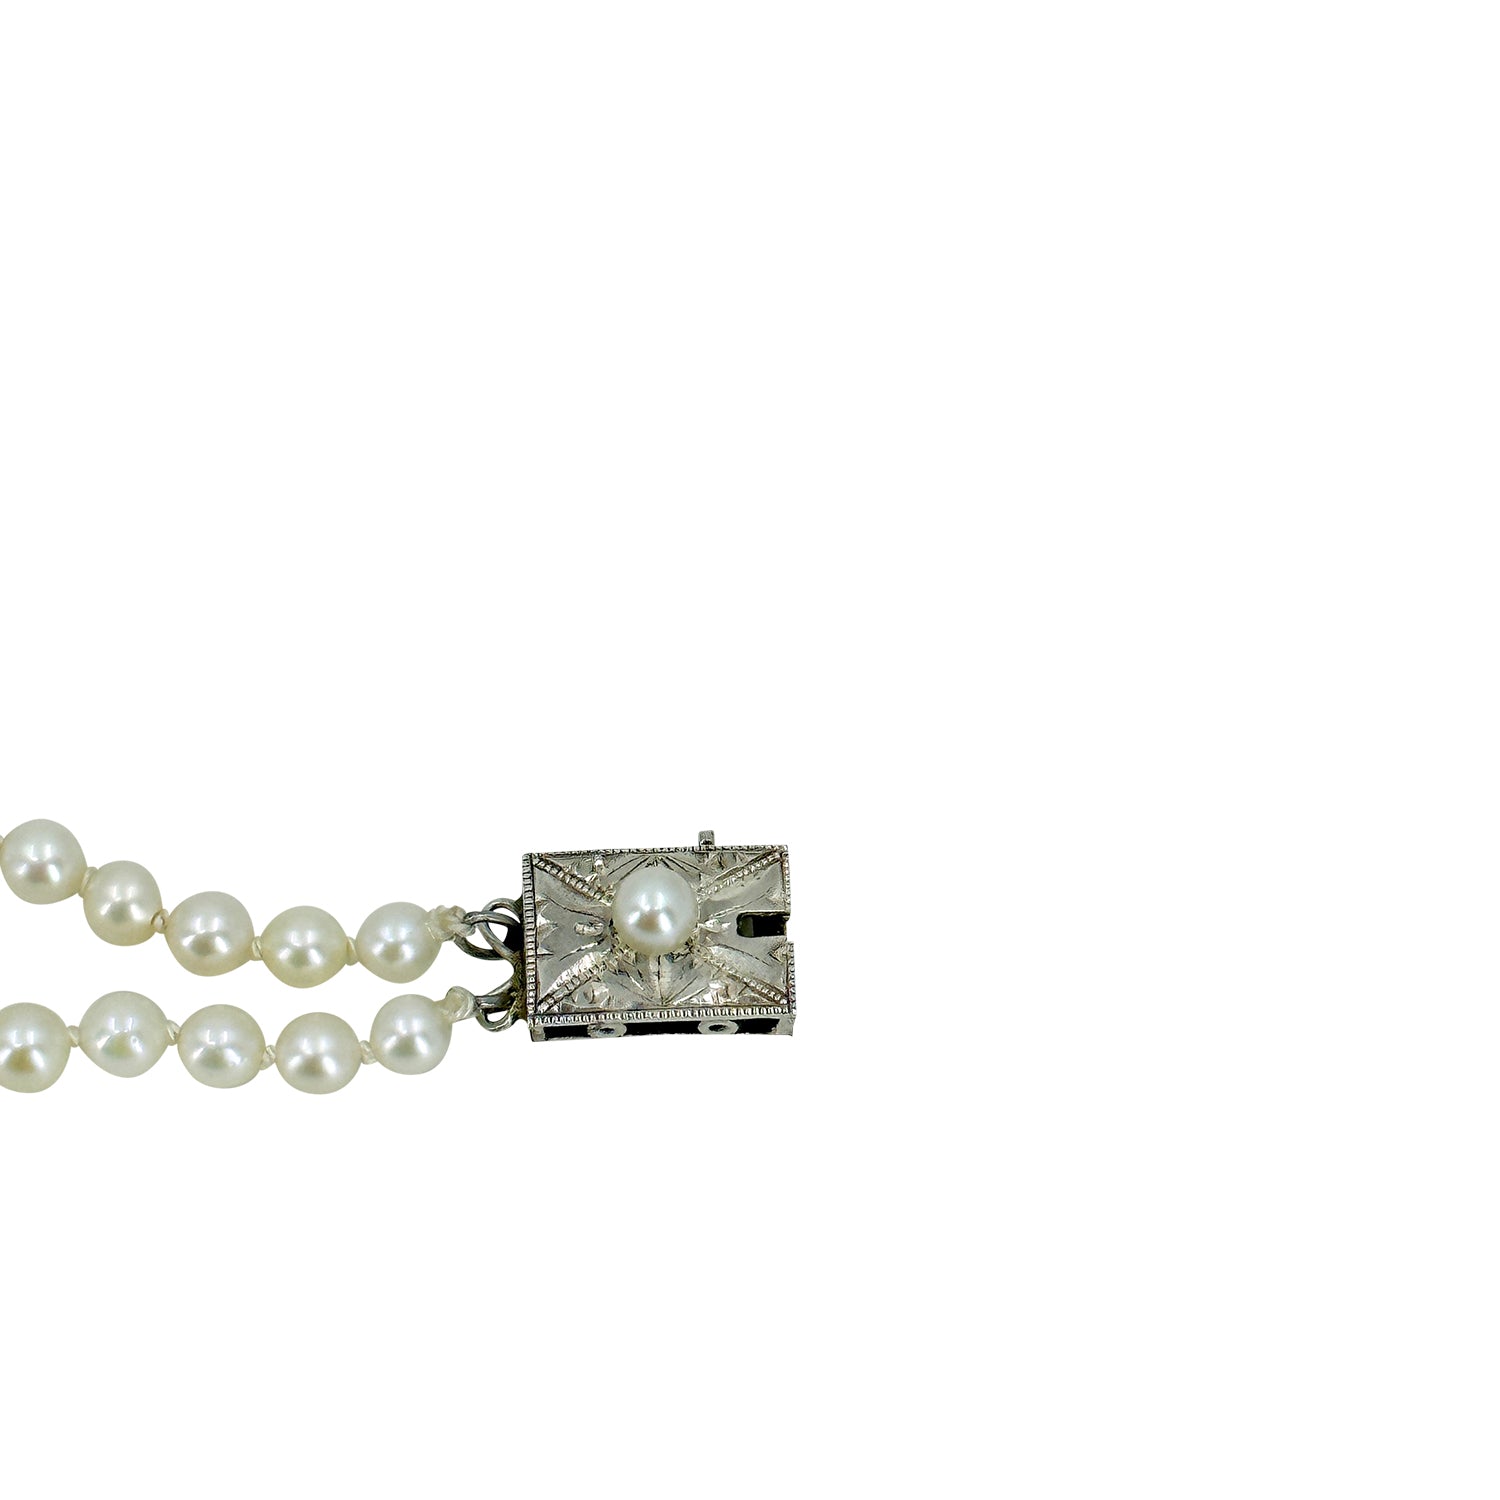 Graduated Double Strand Vintage Japanese Saltwater Akoya Cultured Pearl Bracelet- Sterling Silver